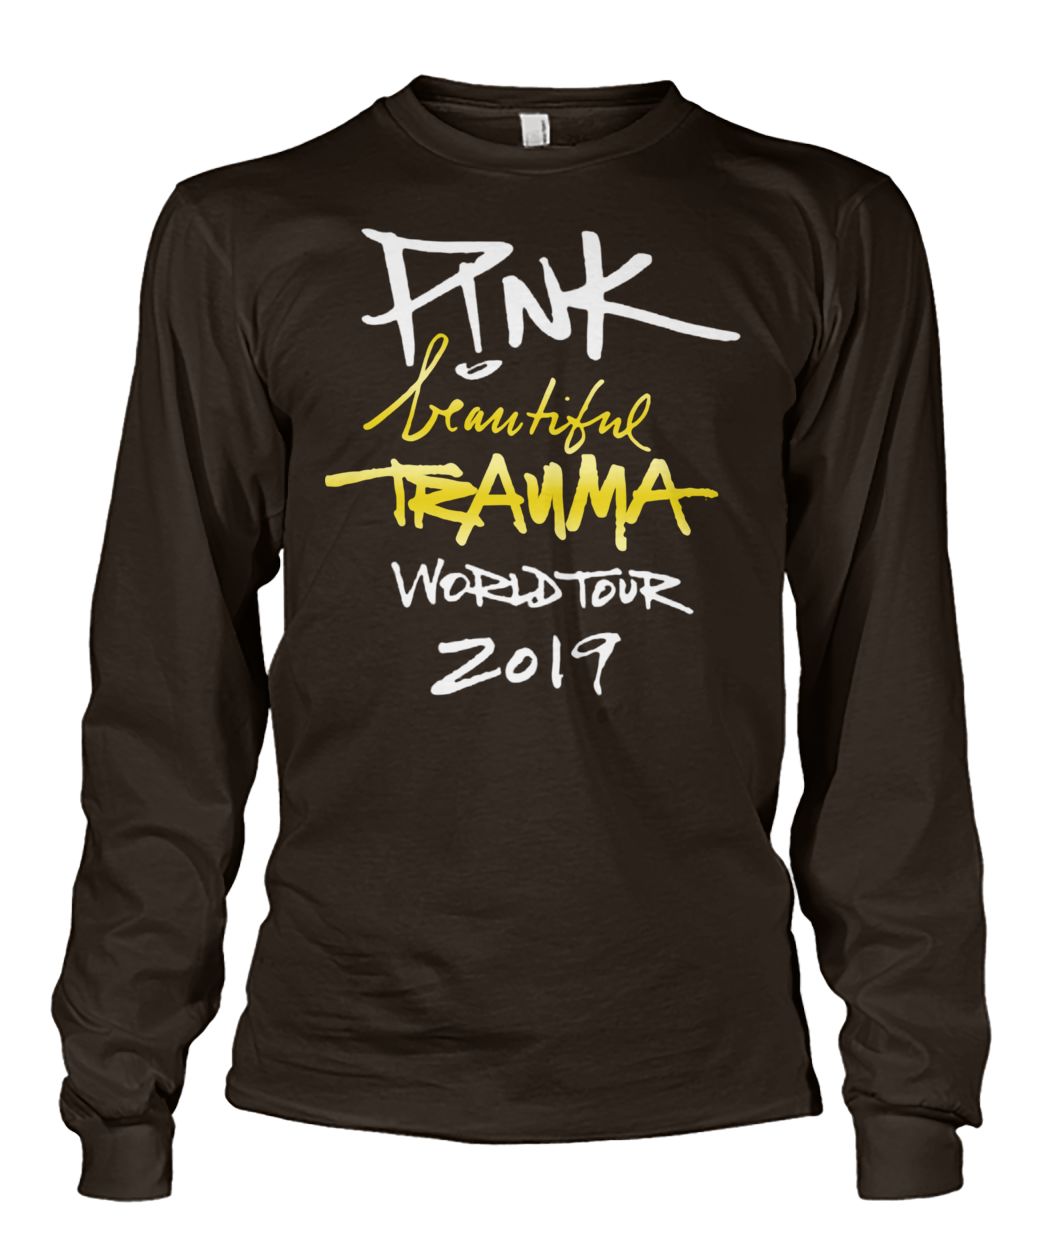 Pink beautiful trauma world tour 2019 unisex long sleeve